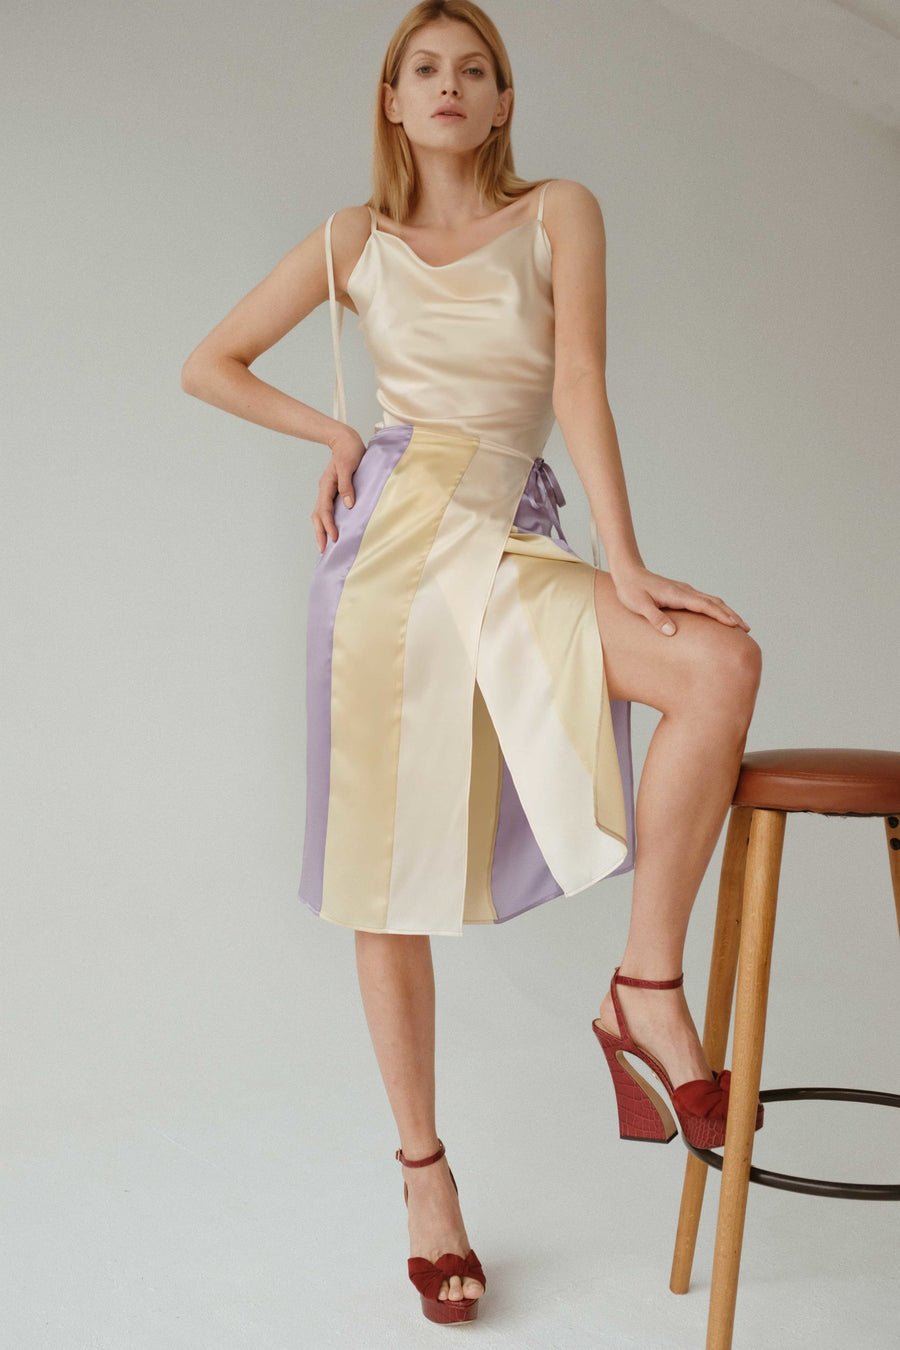 Silk satin wrap skirt in cream yellow lavender